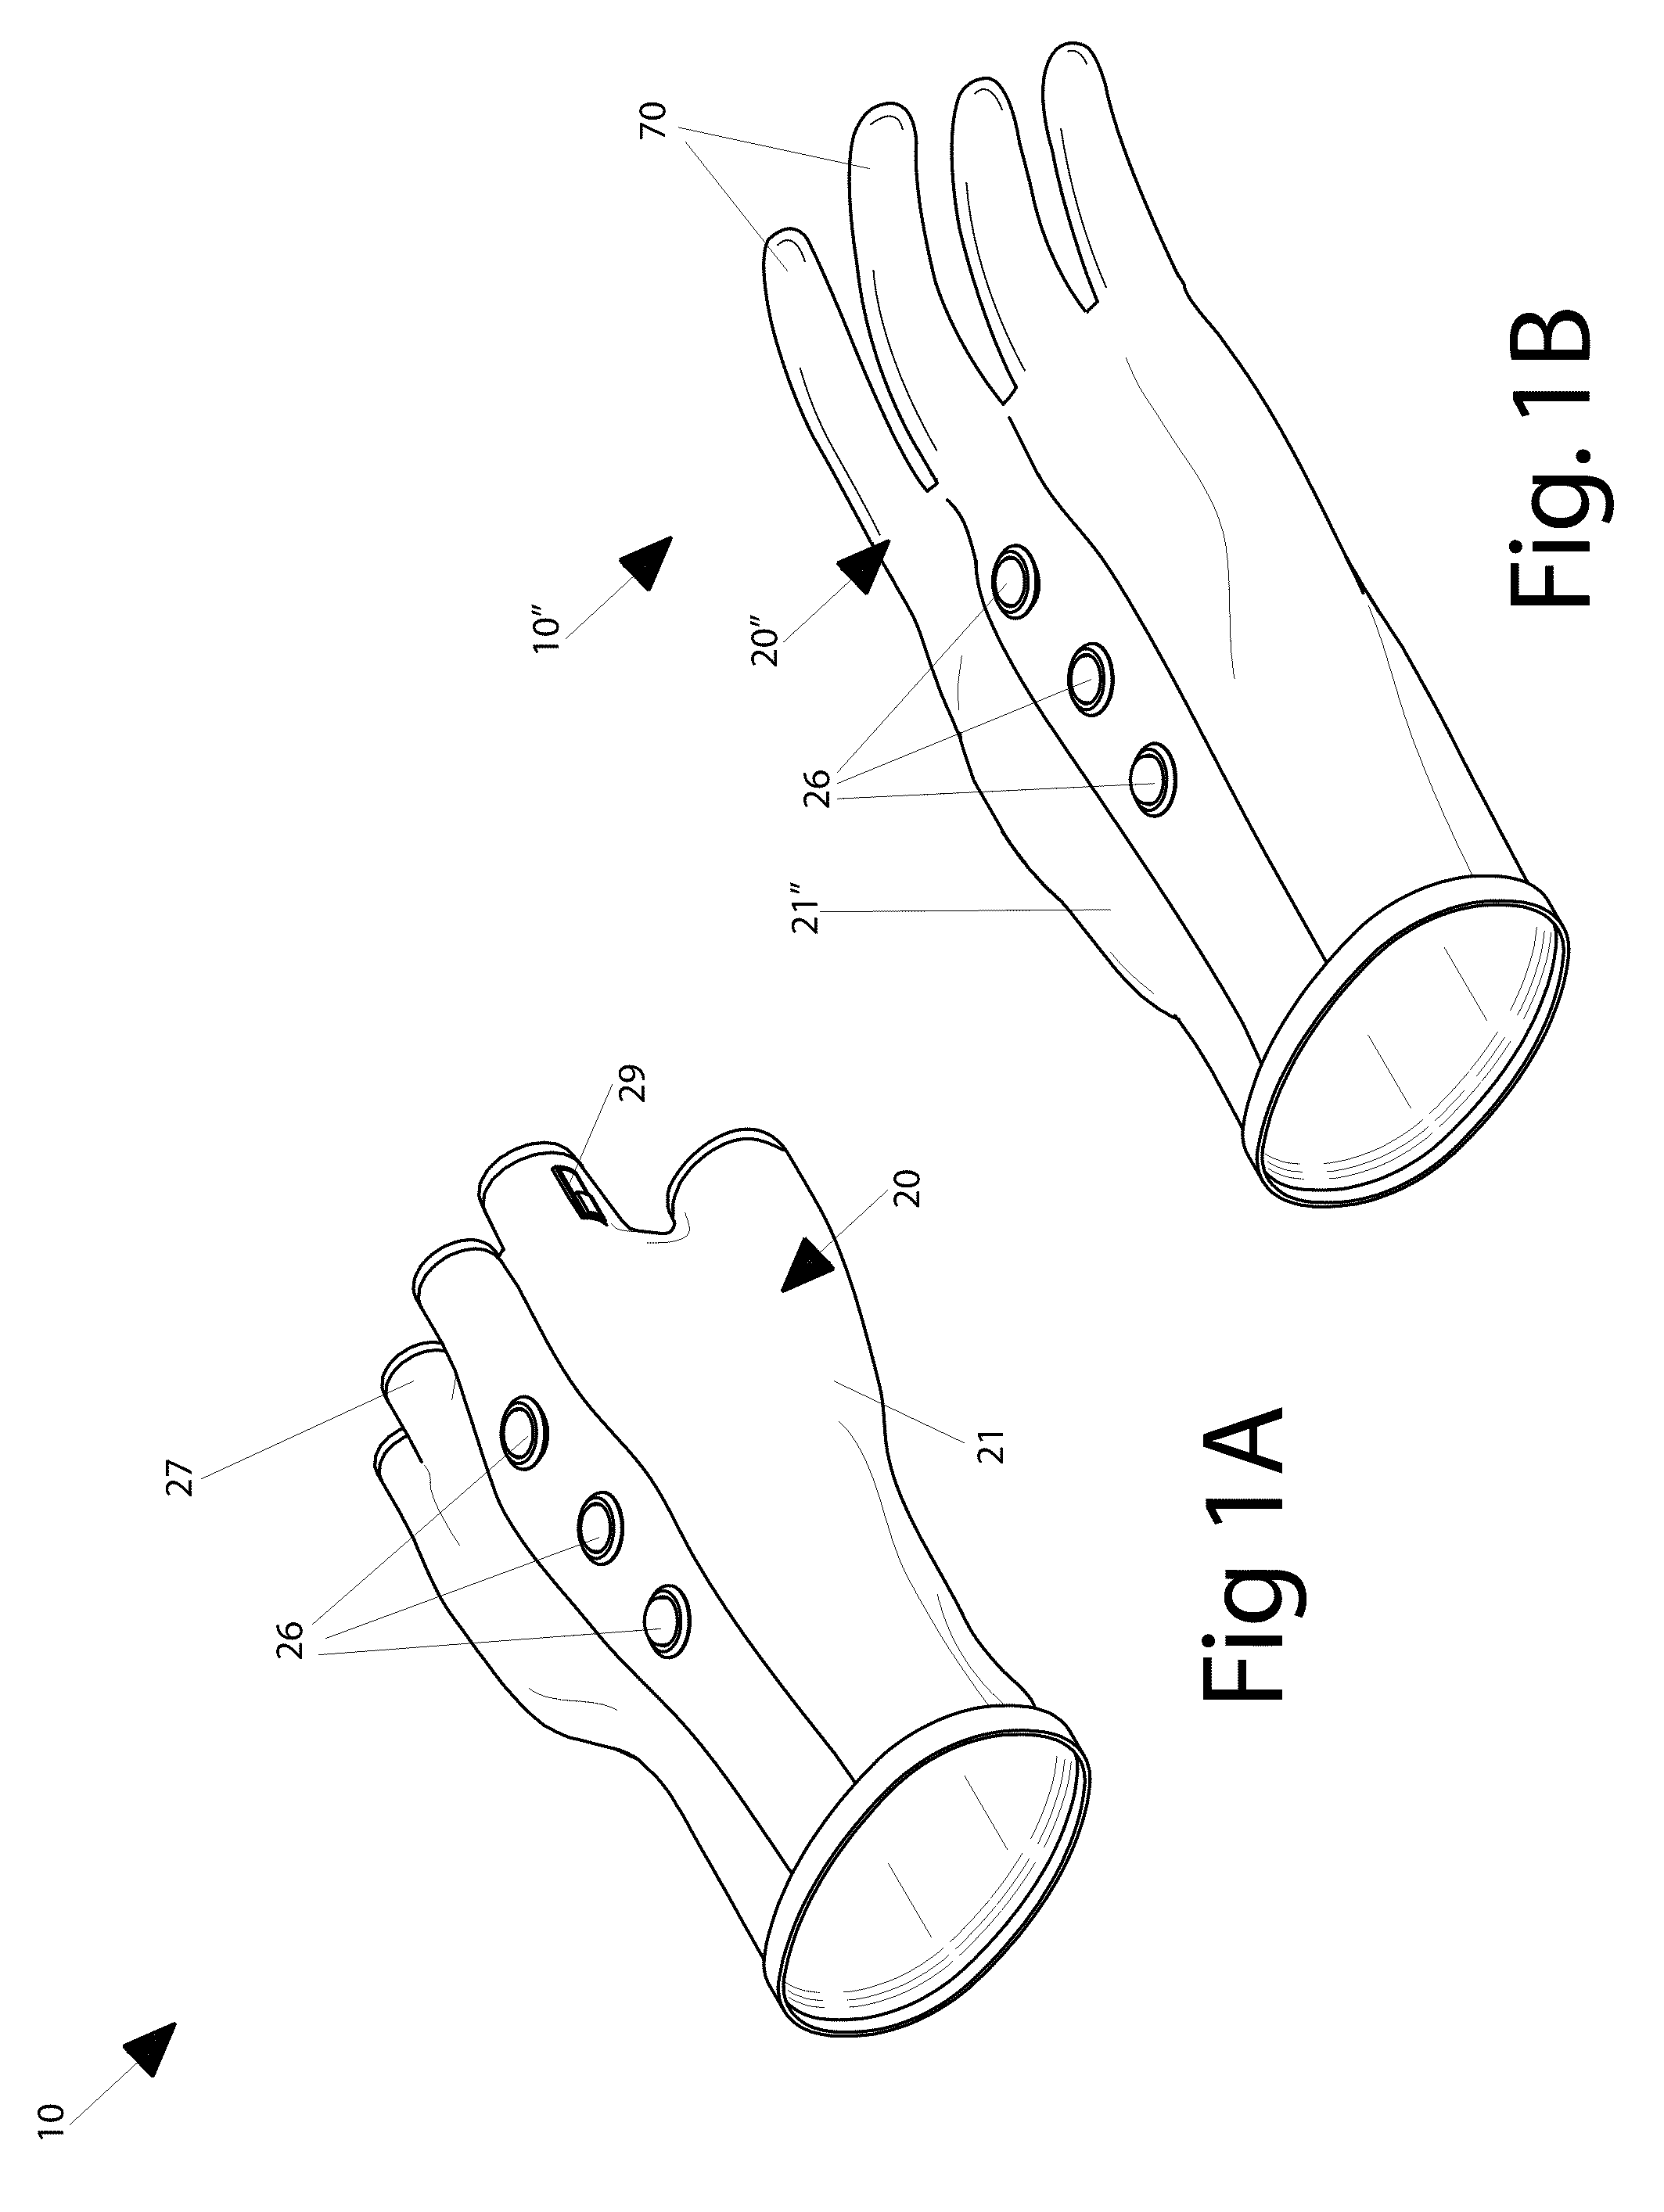 Illuminable hand-signaling glove and associated method